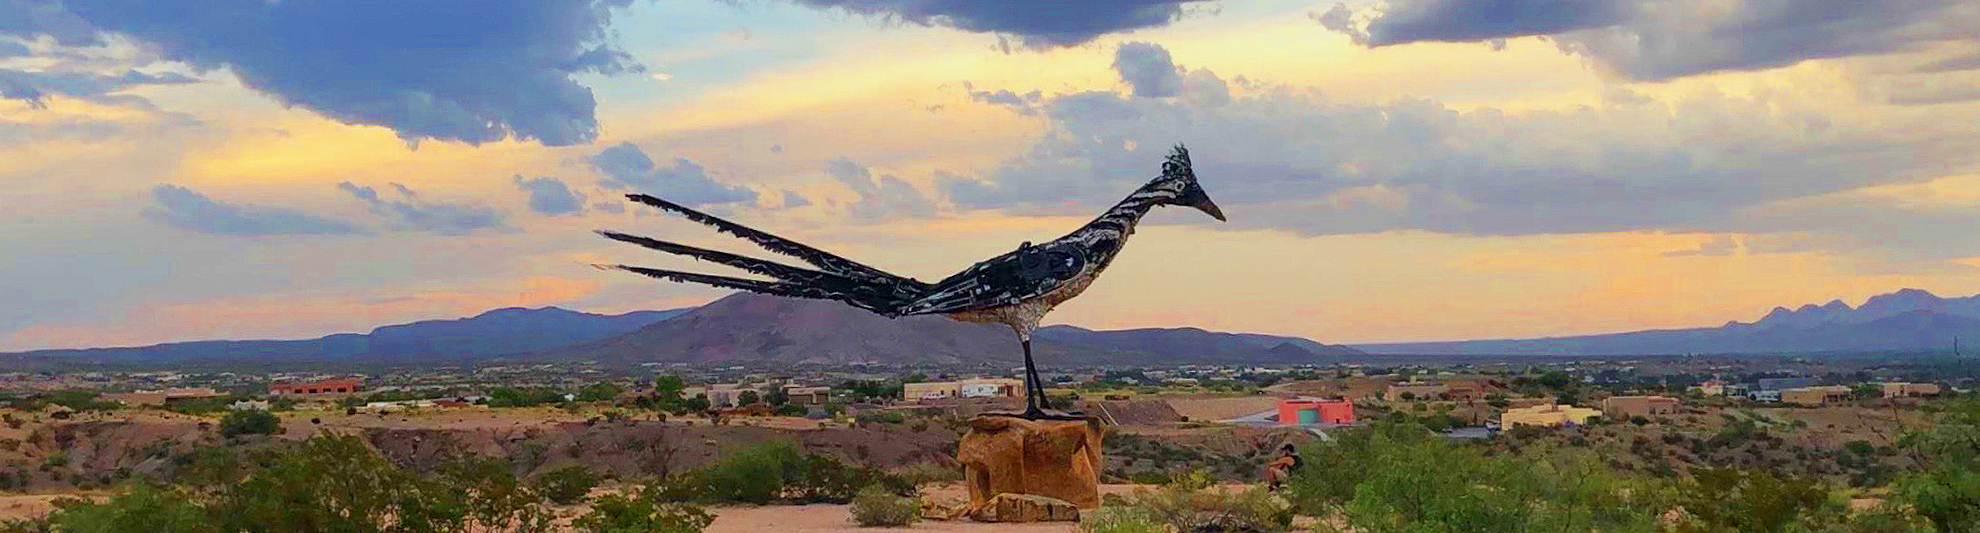 Roadrunner Sculpture, Las Cruces, NM